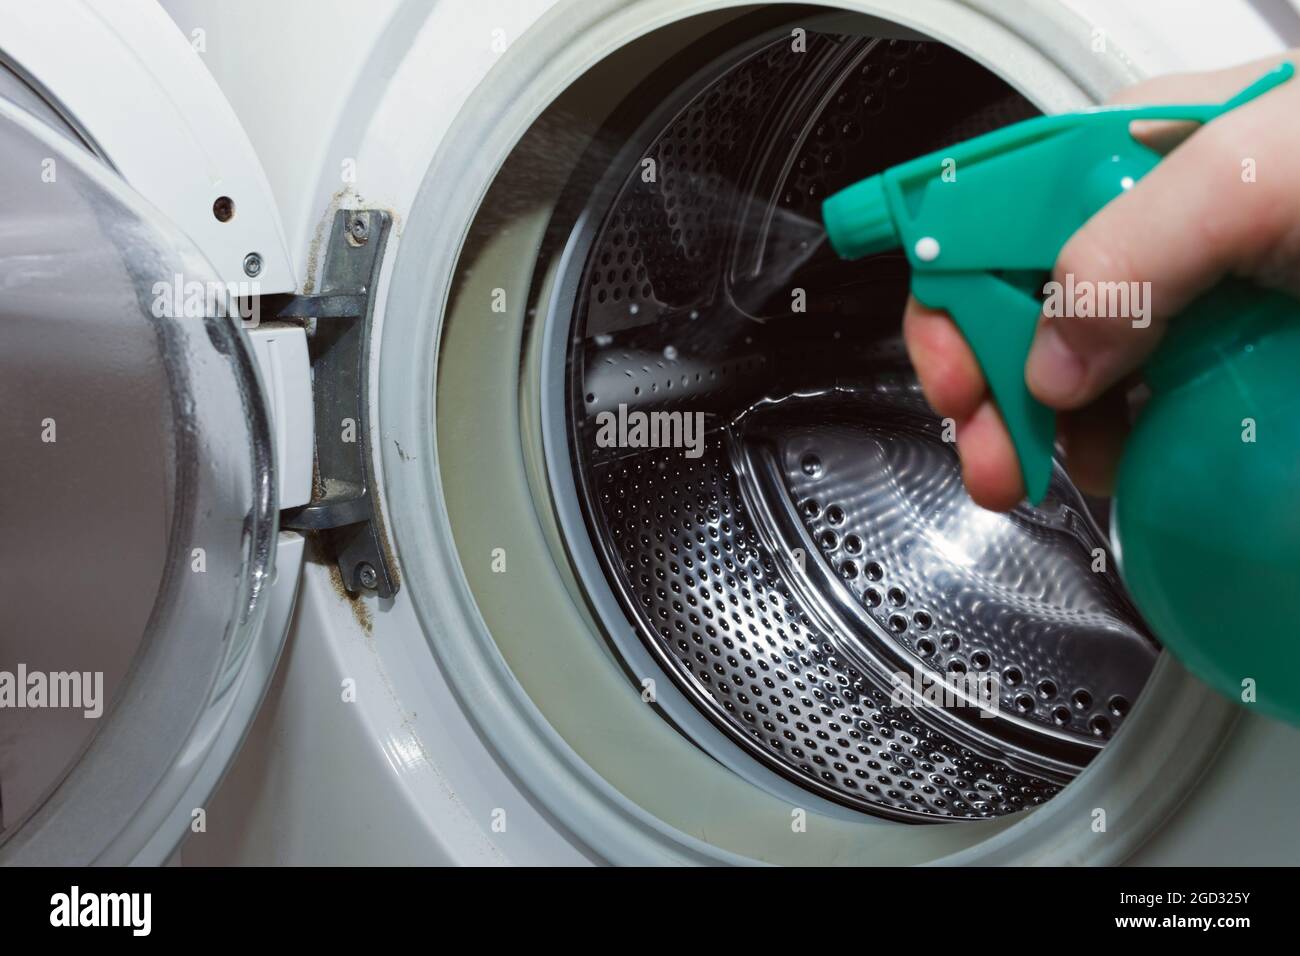 Dirty washing machine Stock Photo - Alamy